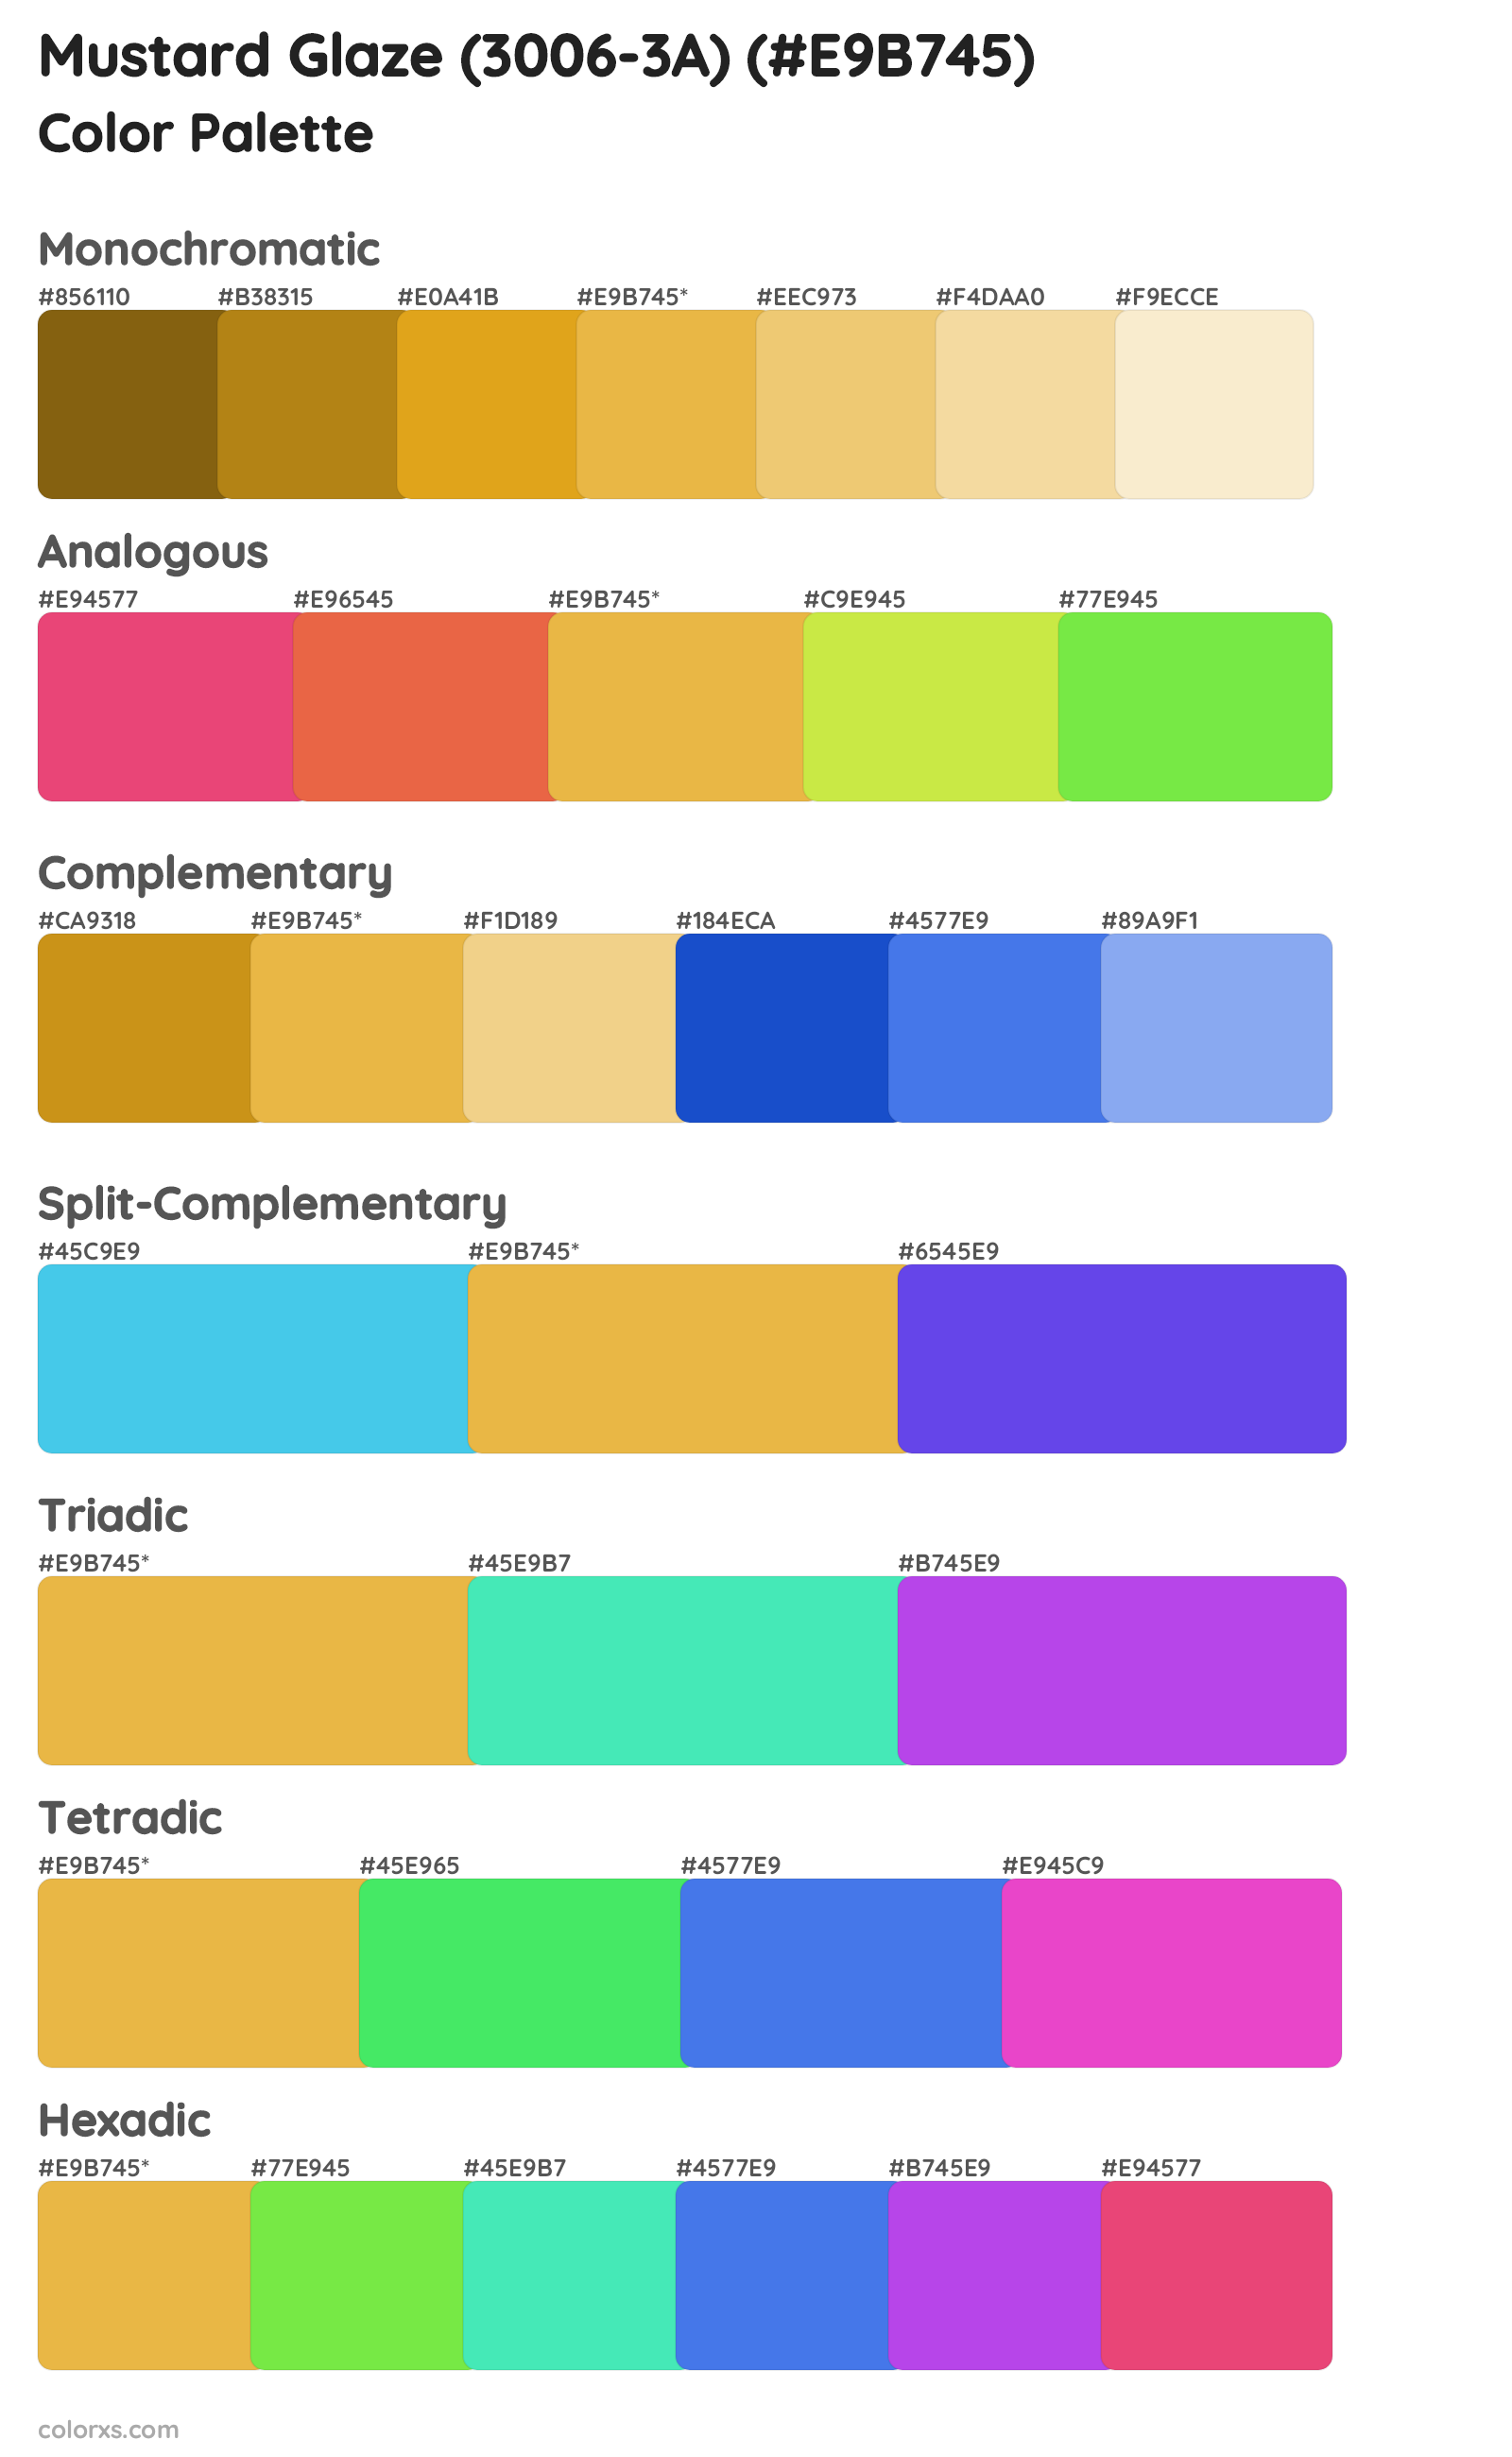 Mustard Glaze (3006-3A) Color Scheme Palettes